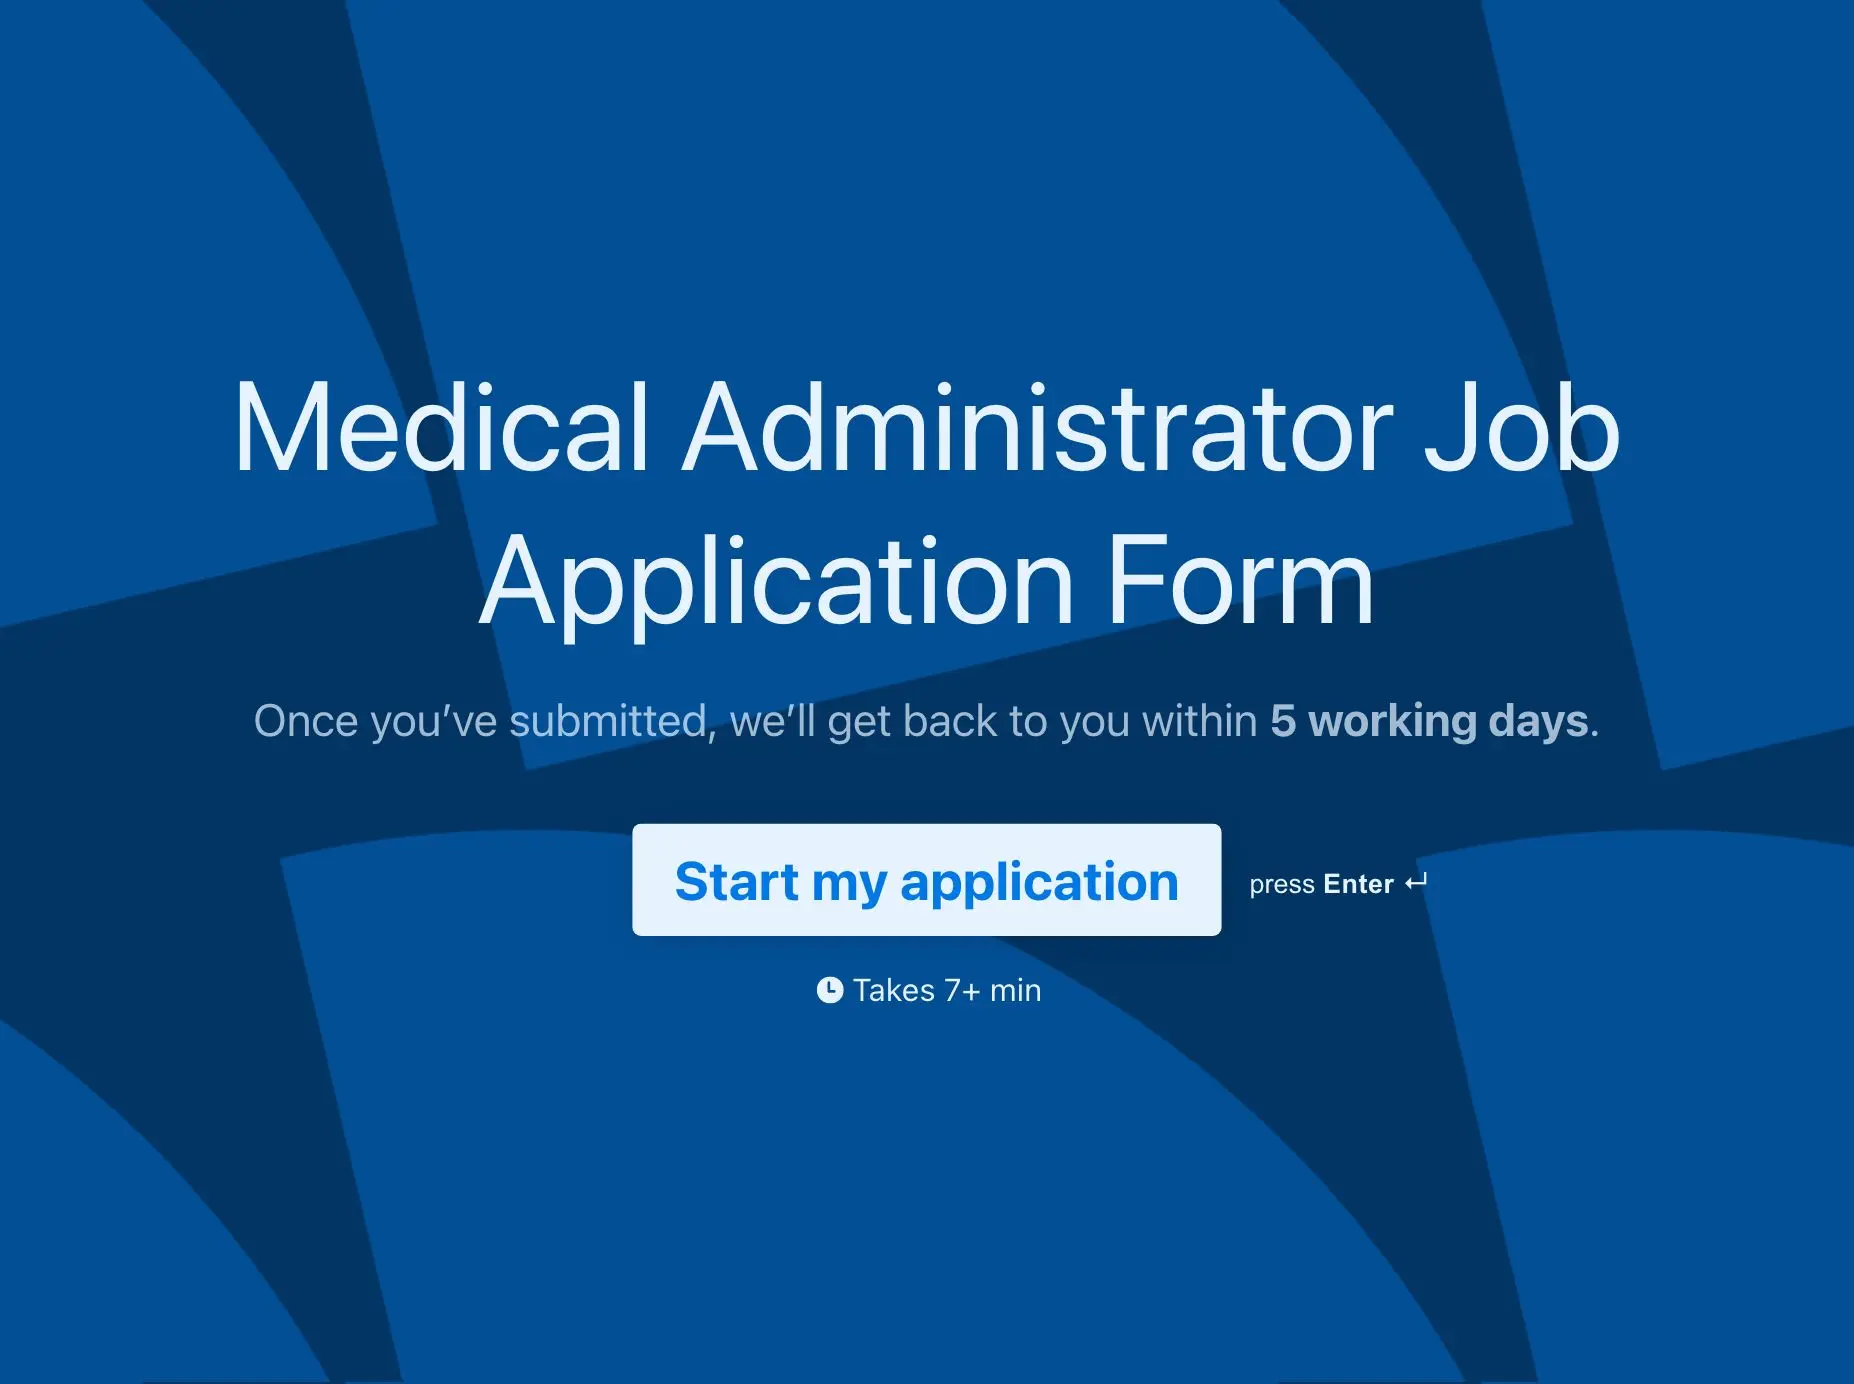 Medical Administrator Job Application Form Template Hero